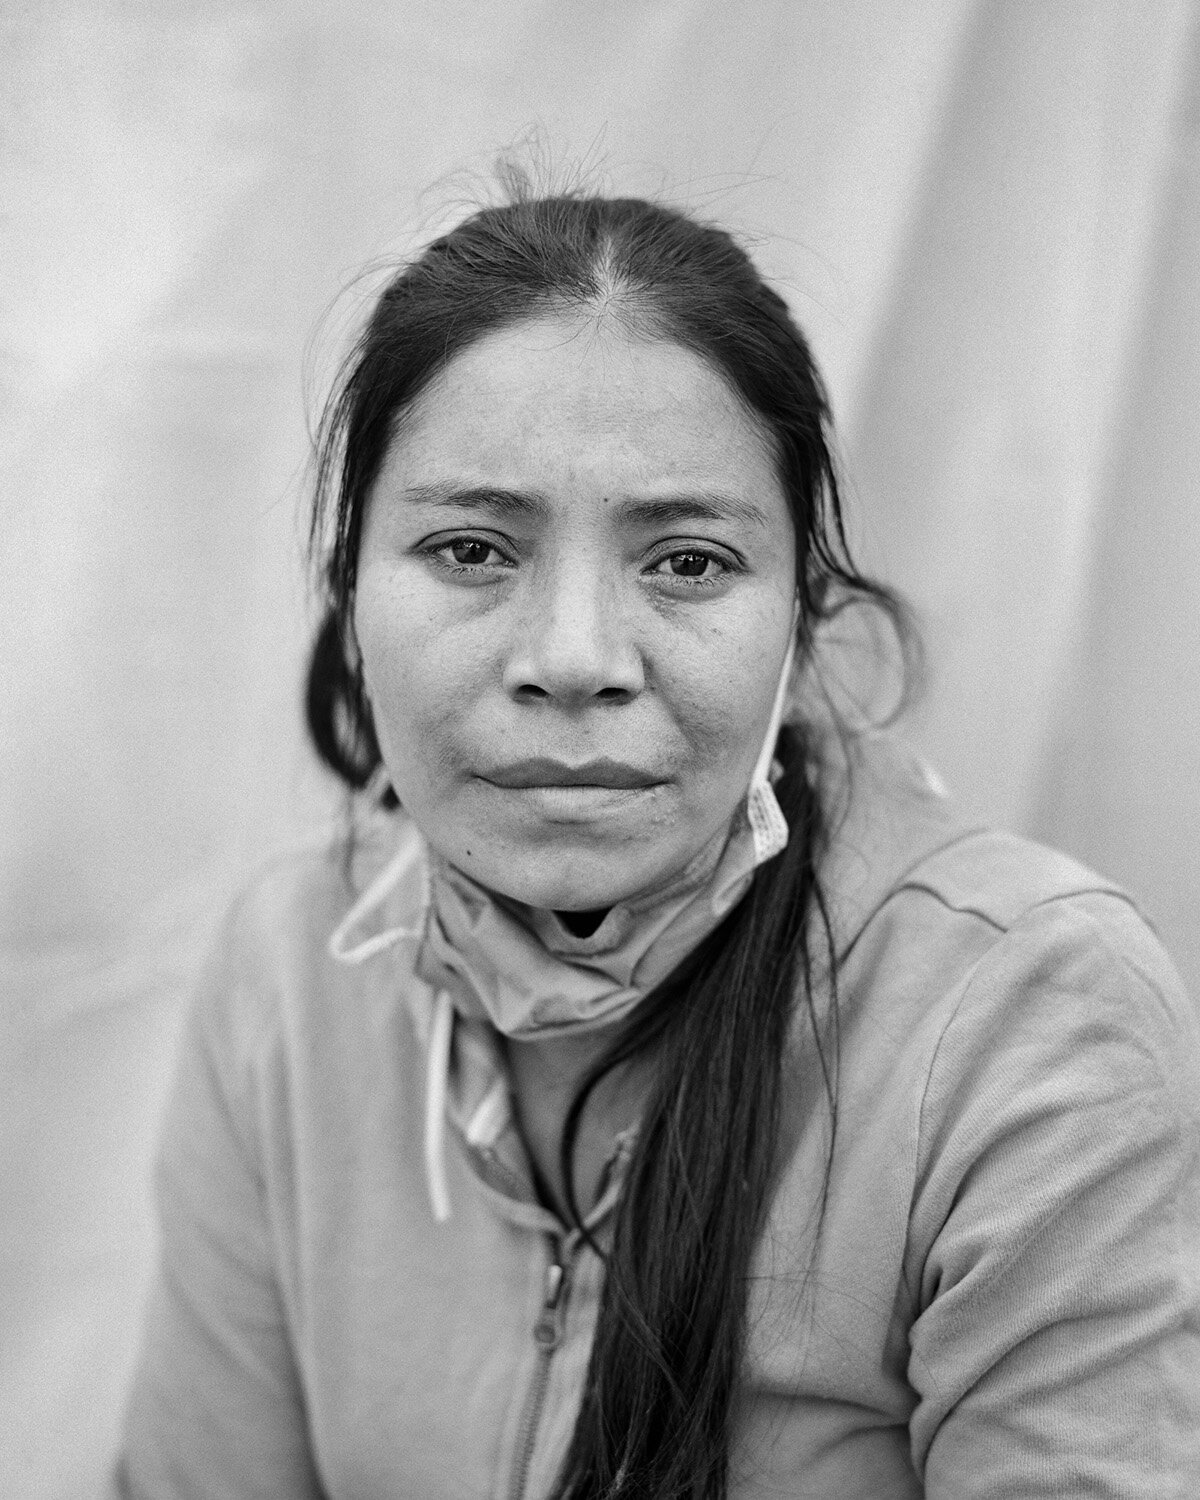  Doris Lara, 31, from Honduras, at Enrique Romero Municipal Gymnasium in Ciudad Juárez, Mexico. Photograph by Doris Lara and Adam Ferguson 